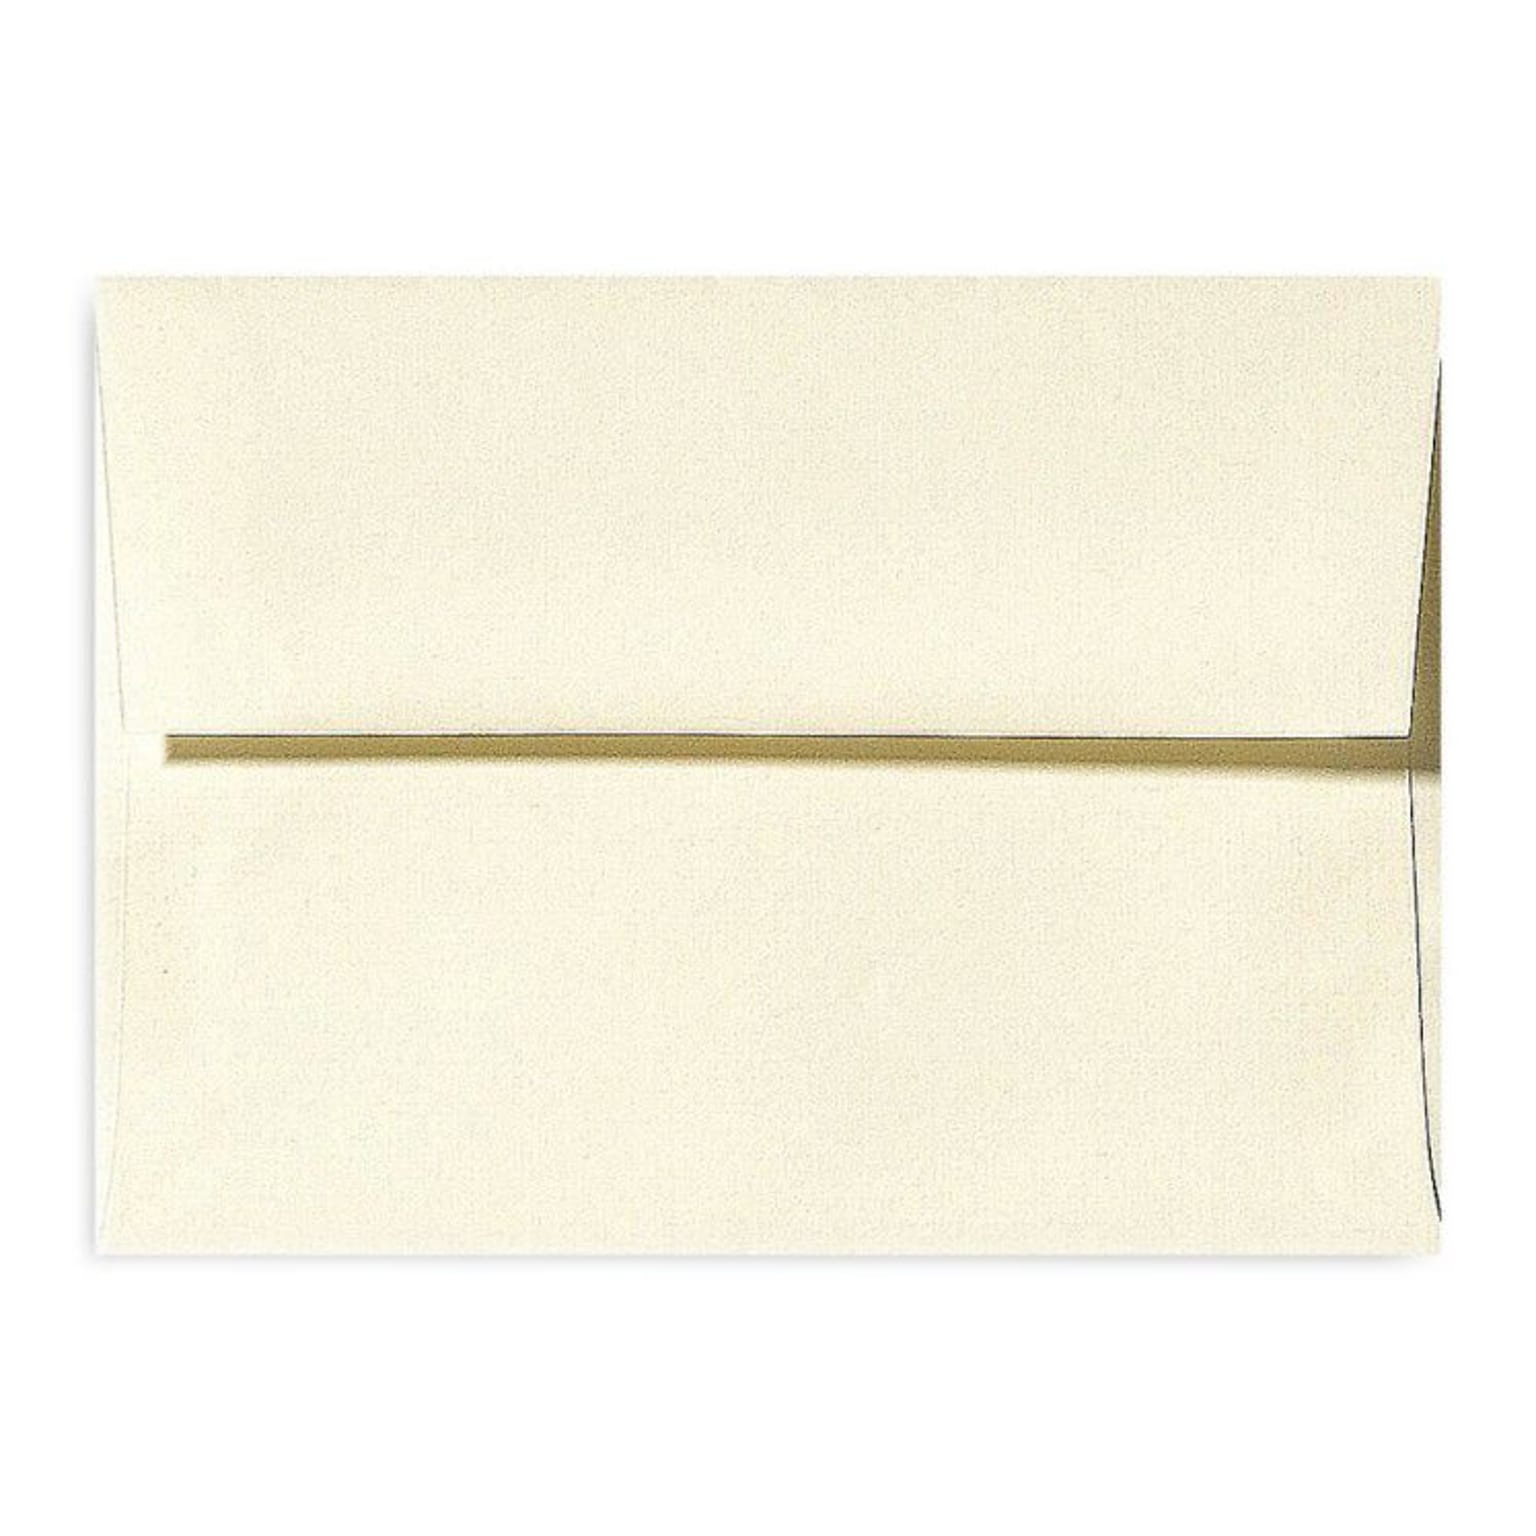 LUX A1 Invitation Envelopes (3 5/8 x 5 1/8) 250/Box, Natural Linen (4865-NLI-250)